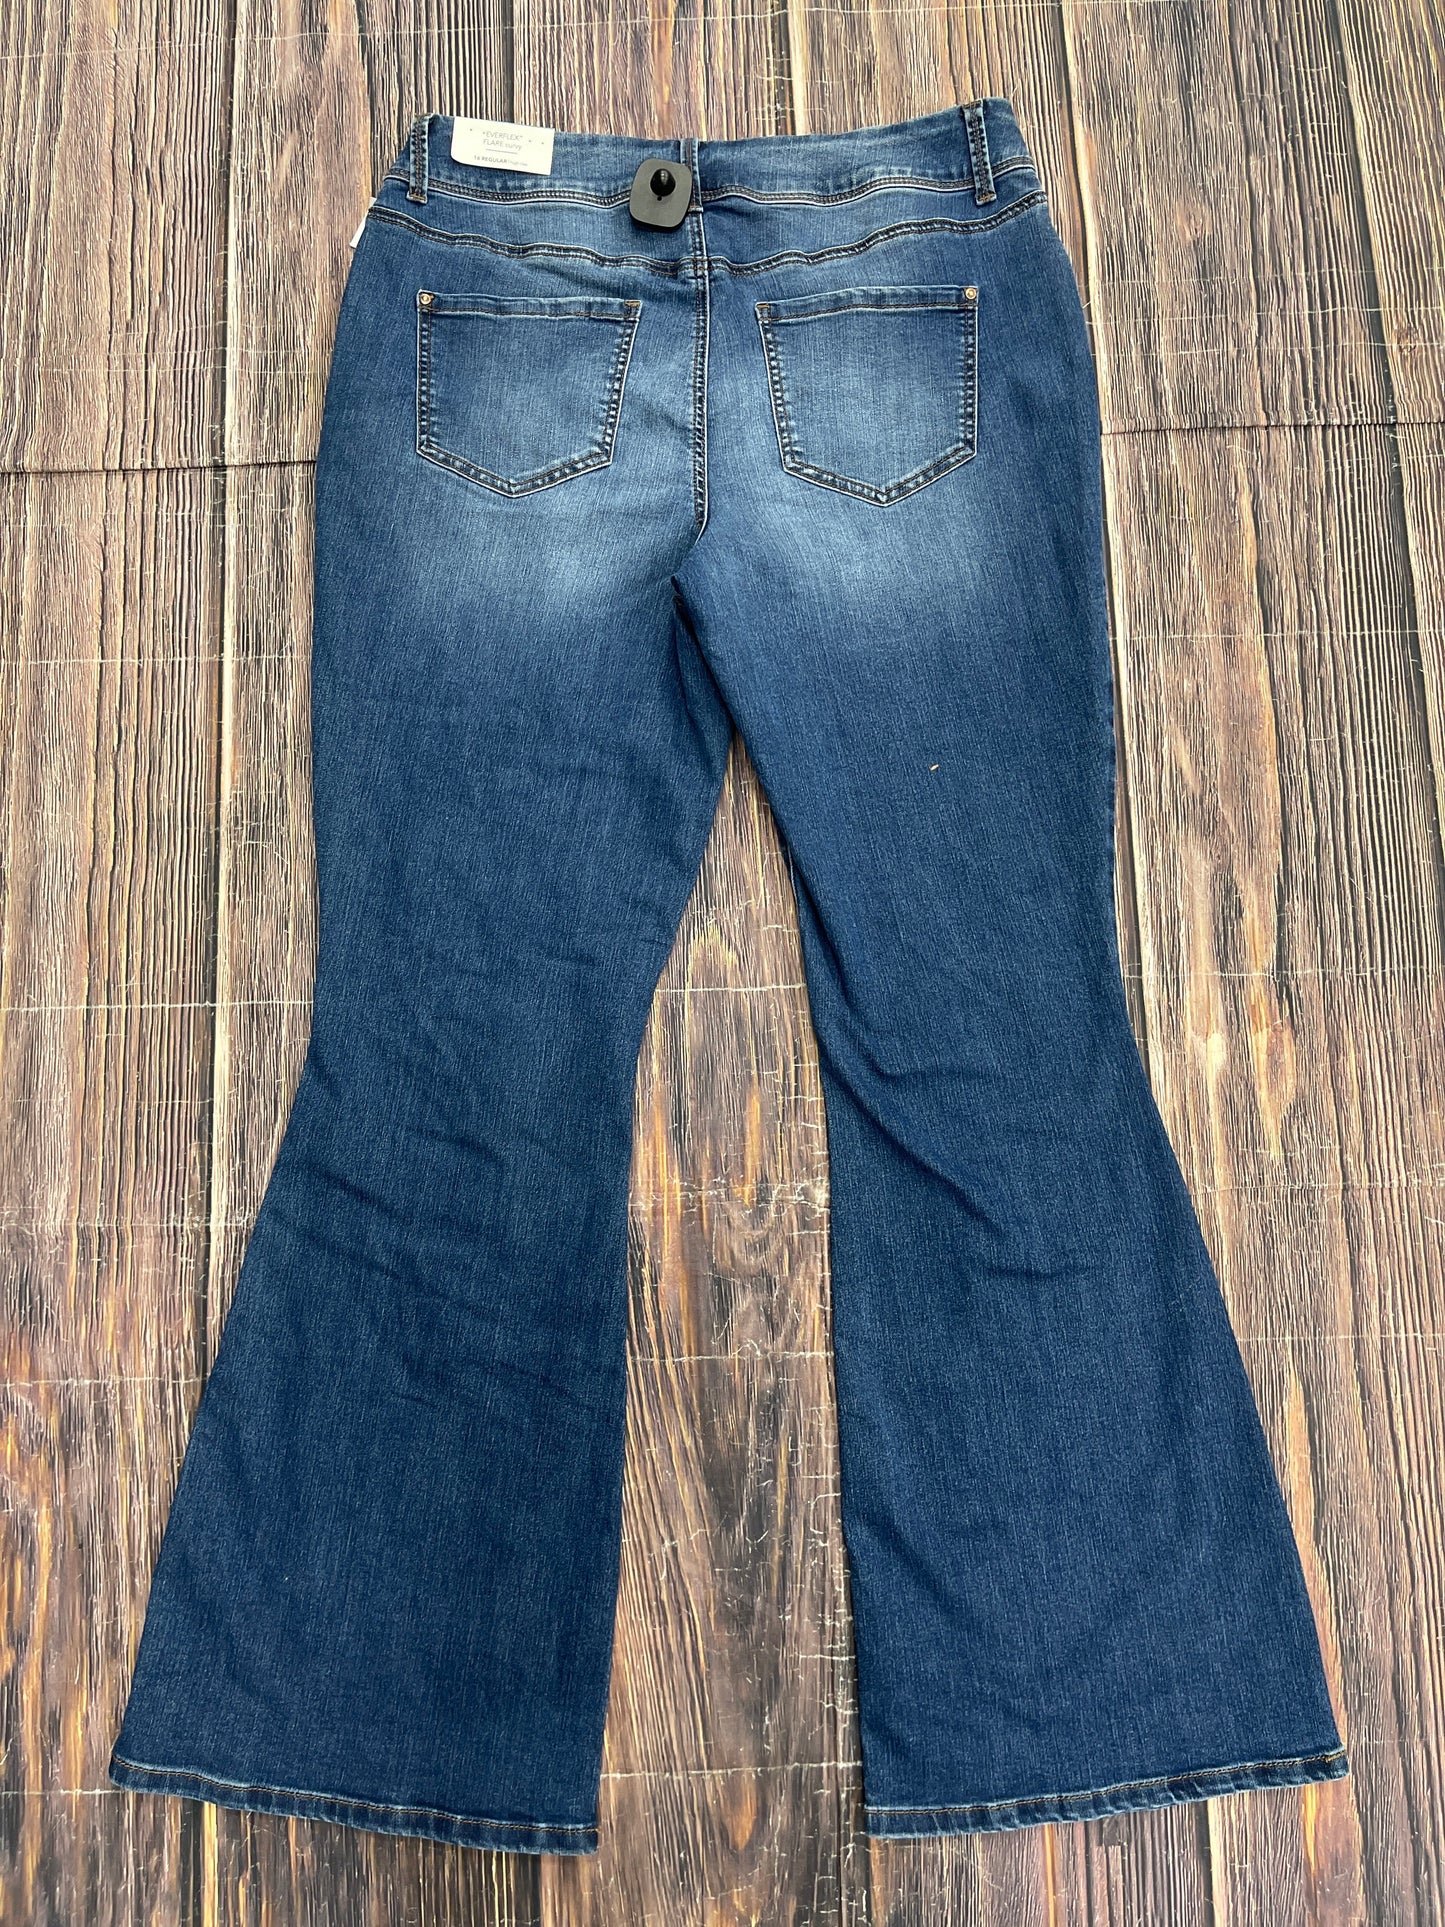 Blue Denim Jeans Boot Cut Maurices, Size 16